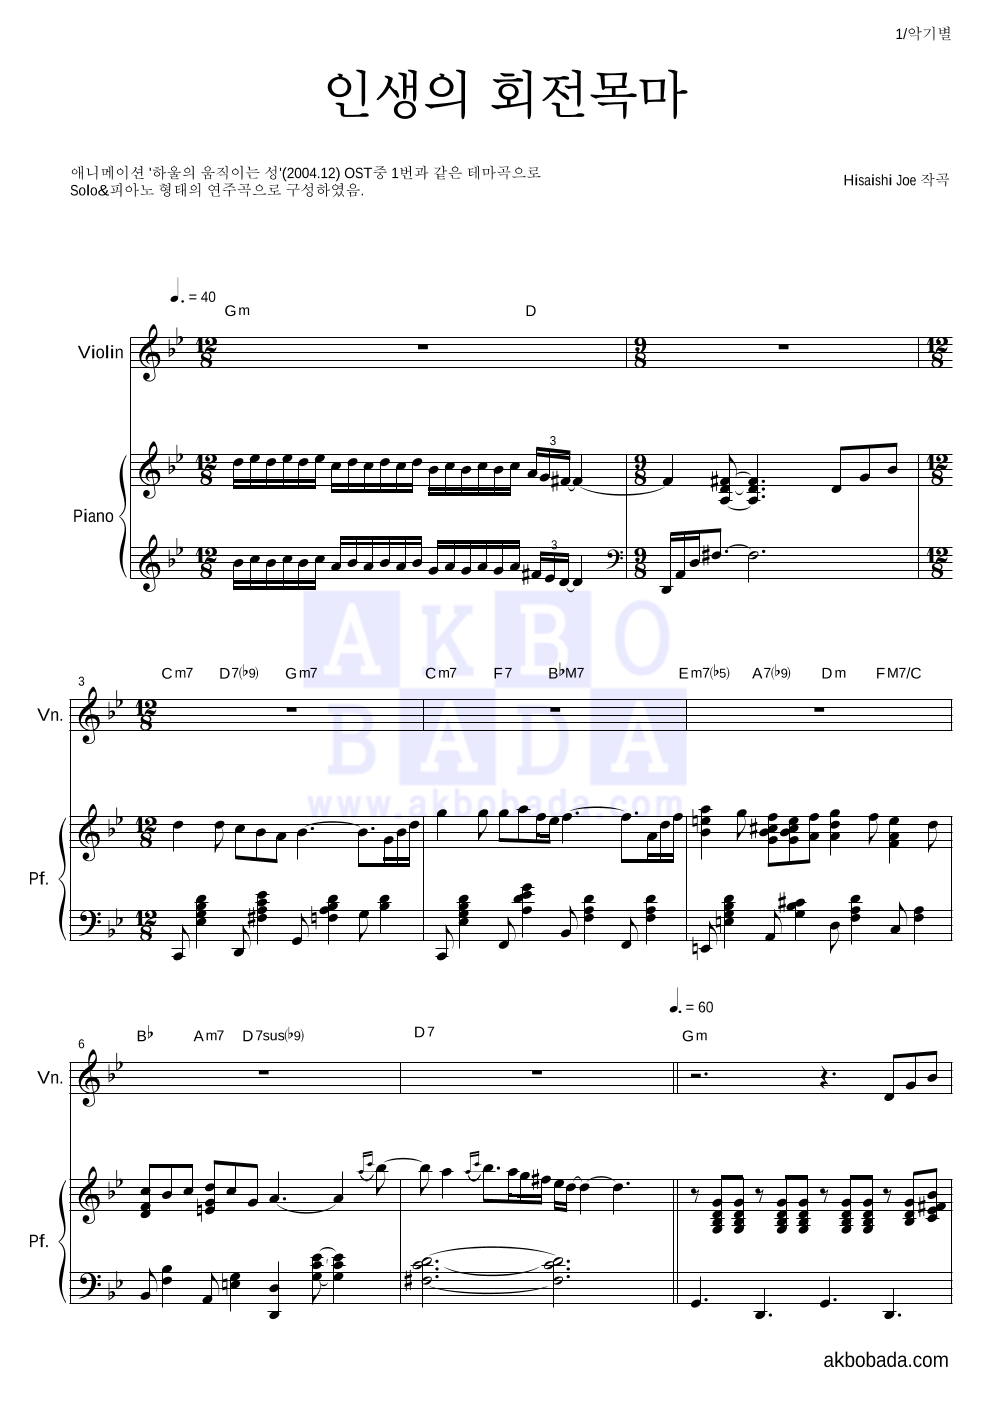 Hisaishi Joe - 인생의 회전목마 바이올린&피아노 악보 